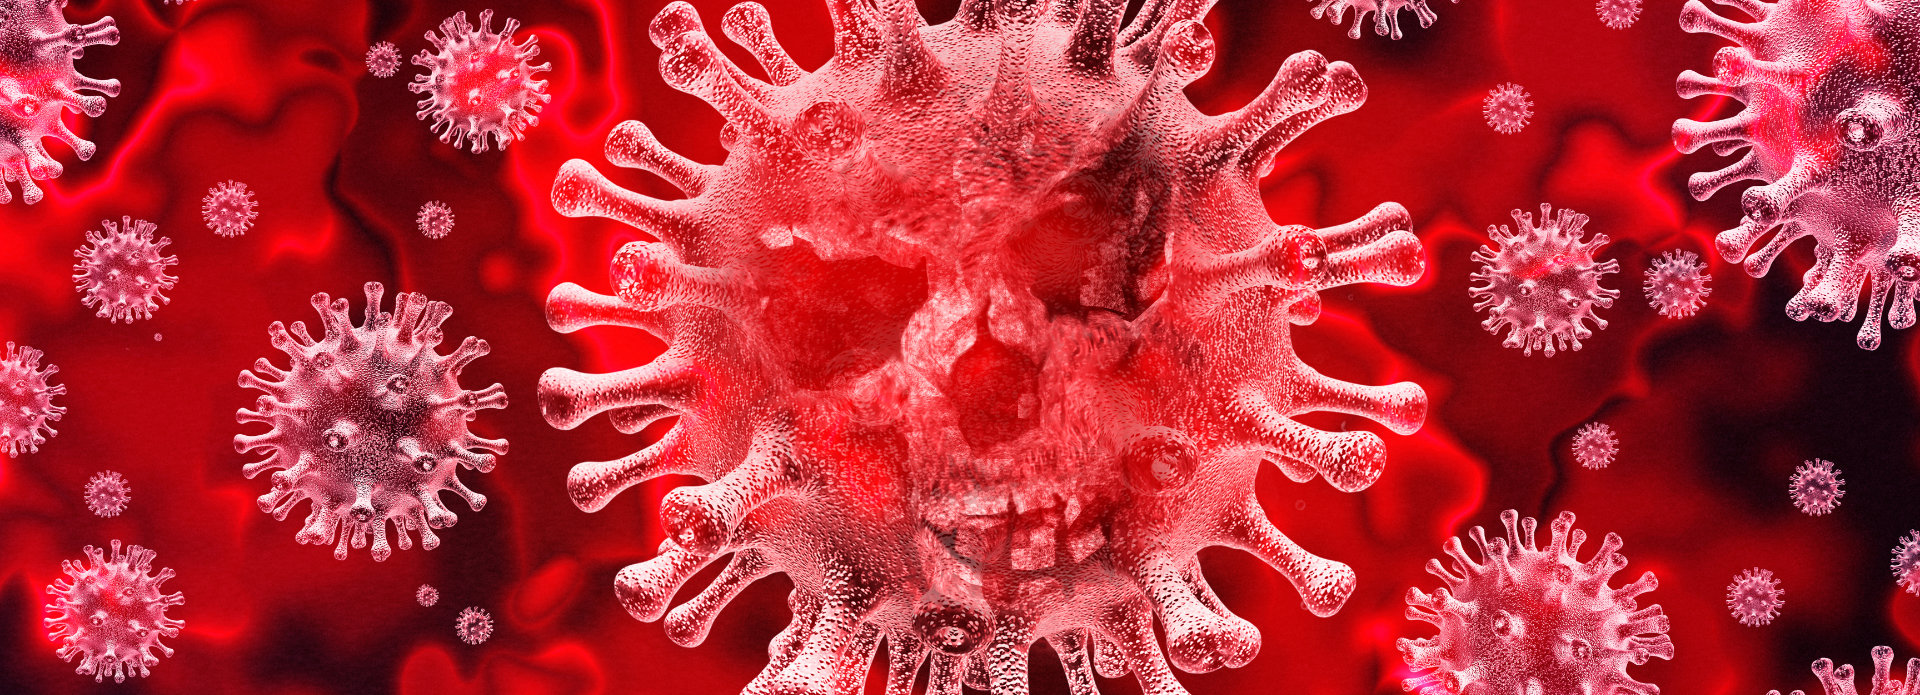 visualisation of virus